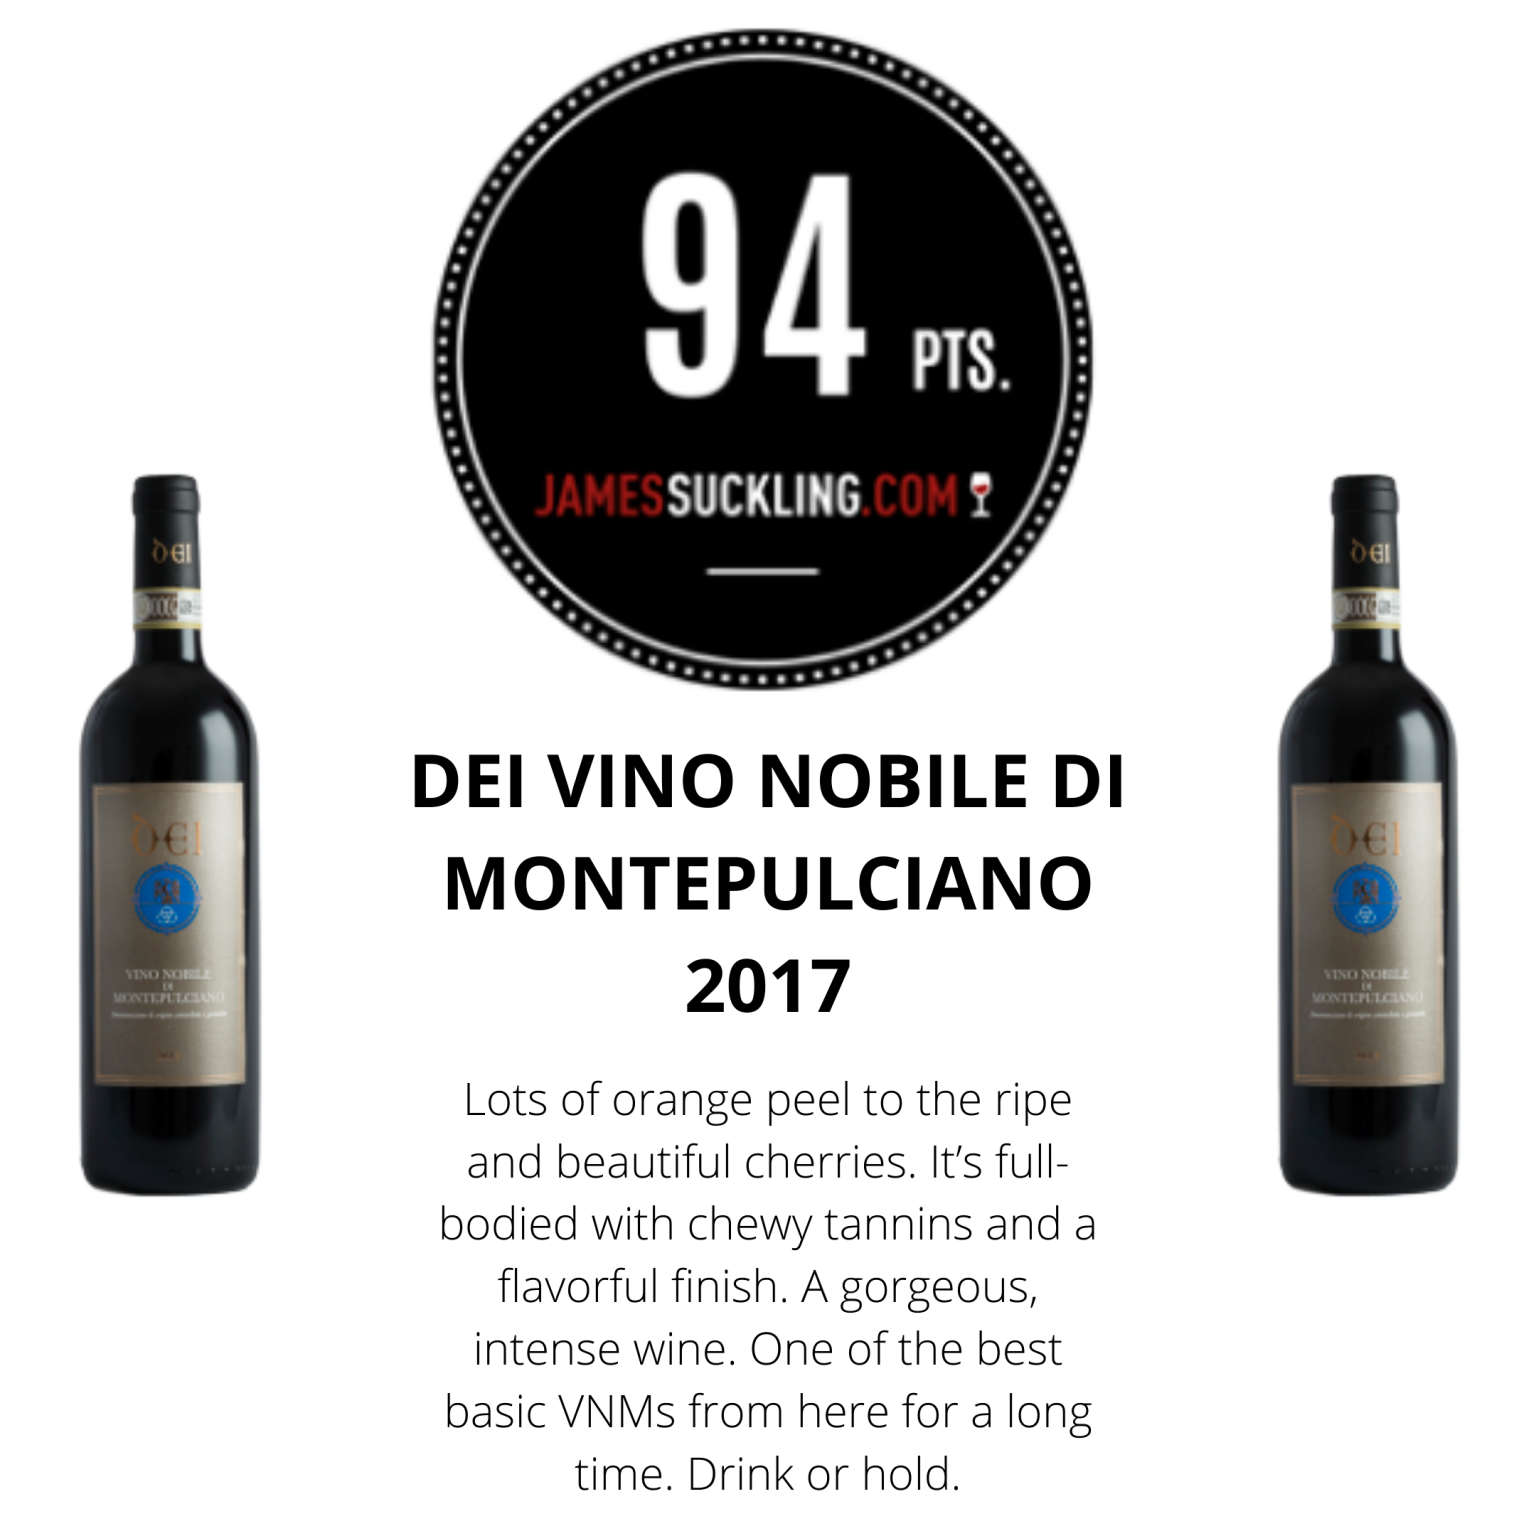 James Suckling – 94 punti al Vino Nobile di Montepulciano 2017